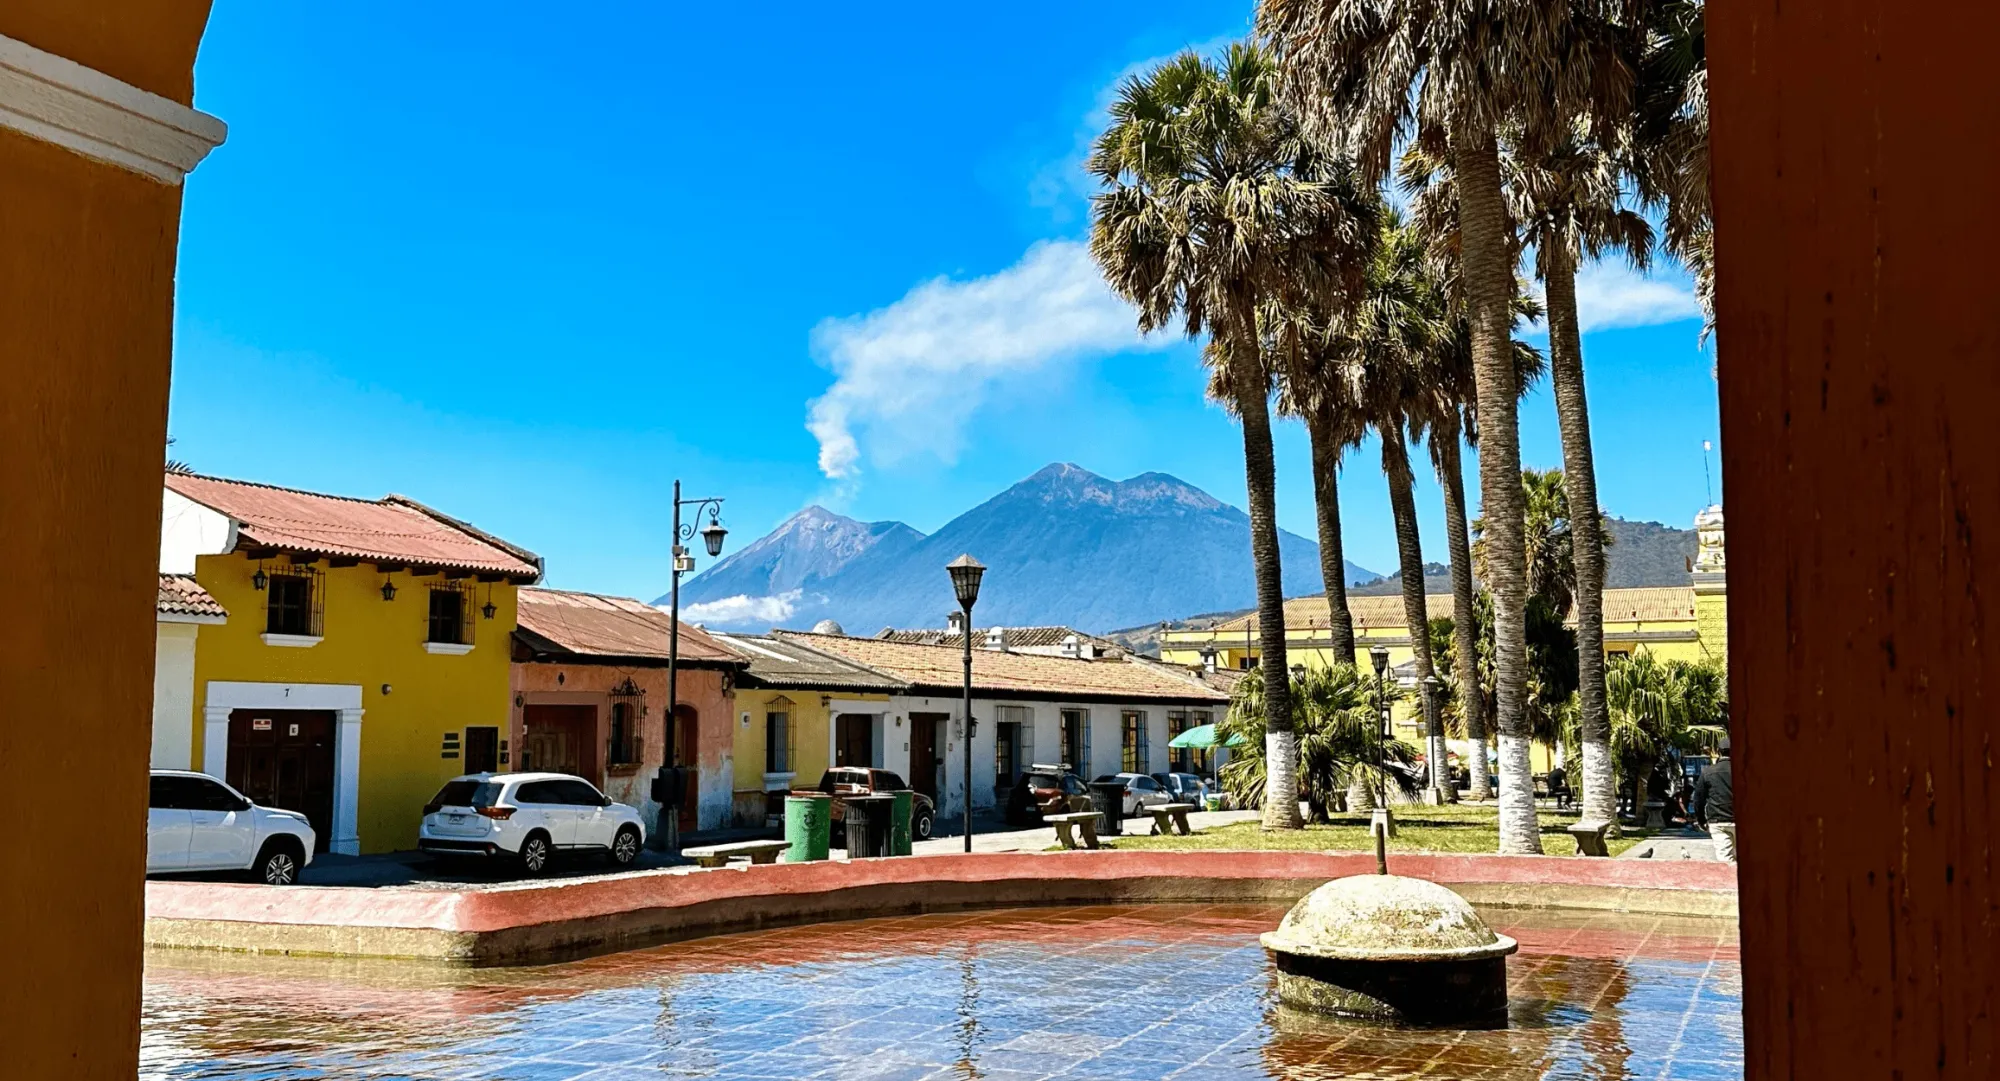 Historical plaza in Antigua, Guatemala